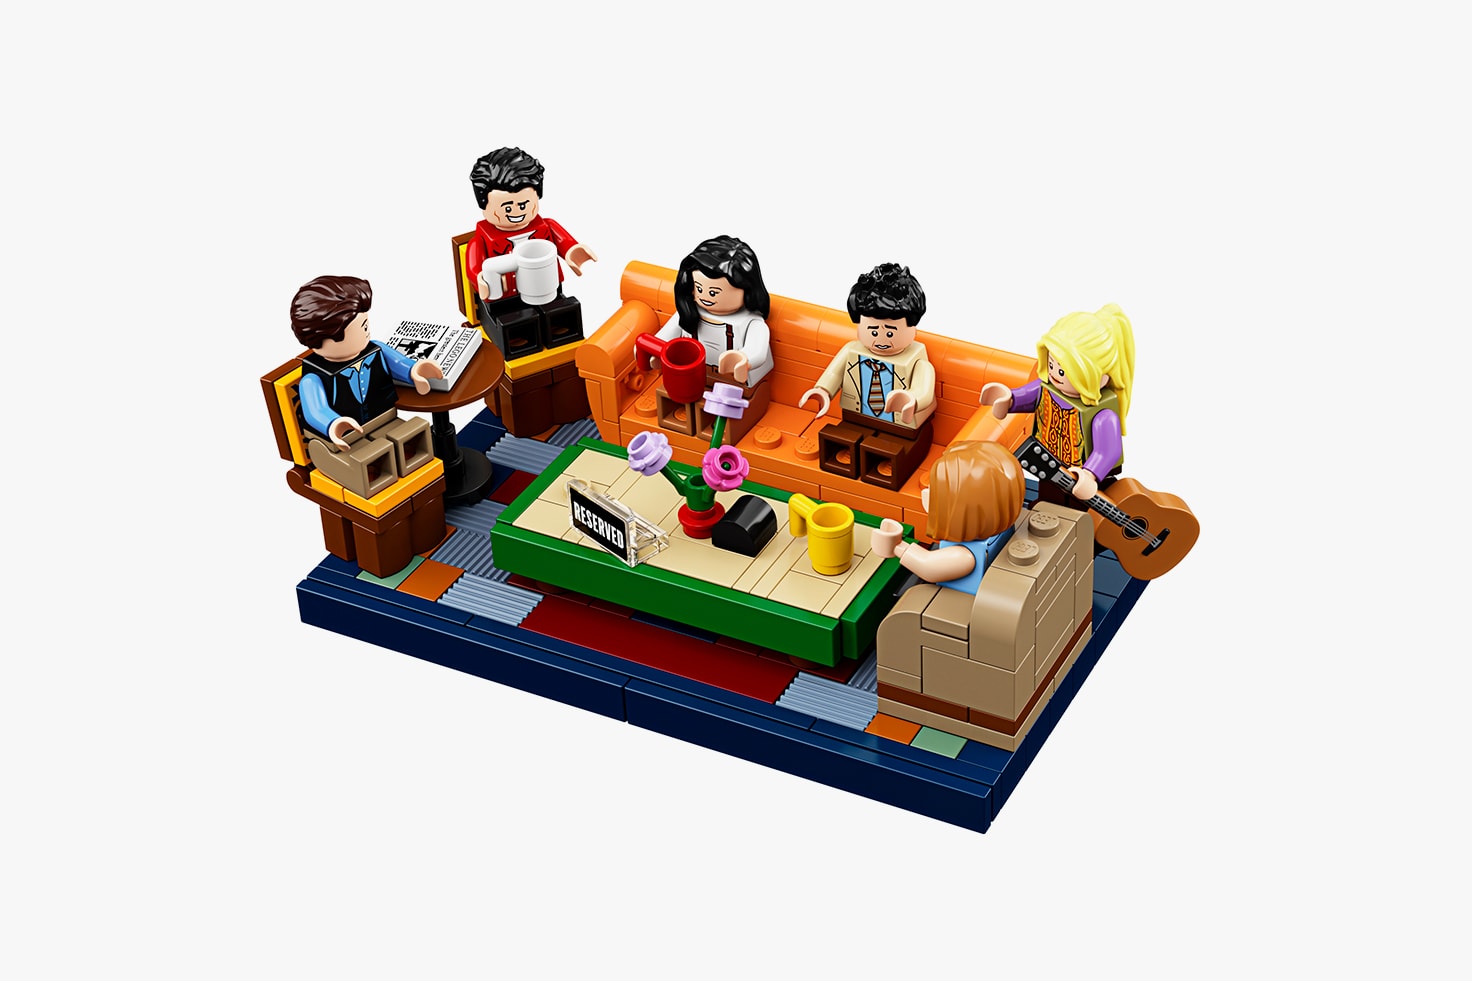 LEGO Friends Central Perk TV Set Release Info 90s television sitcom ross rachel chandler joe monica gunther toys replica collectibles 